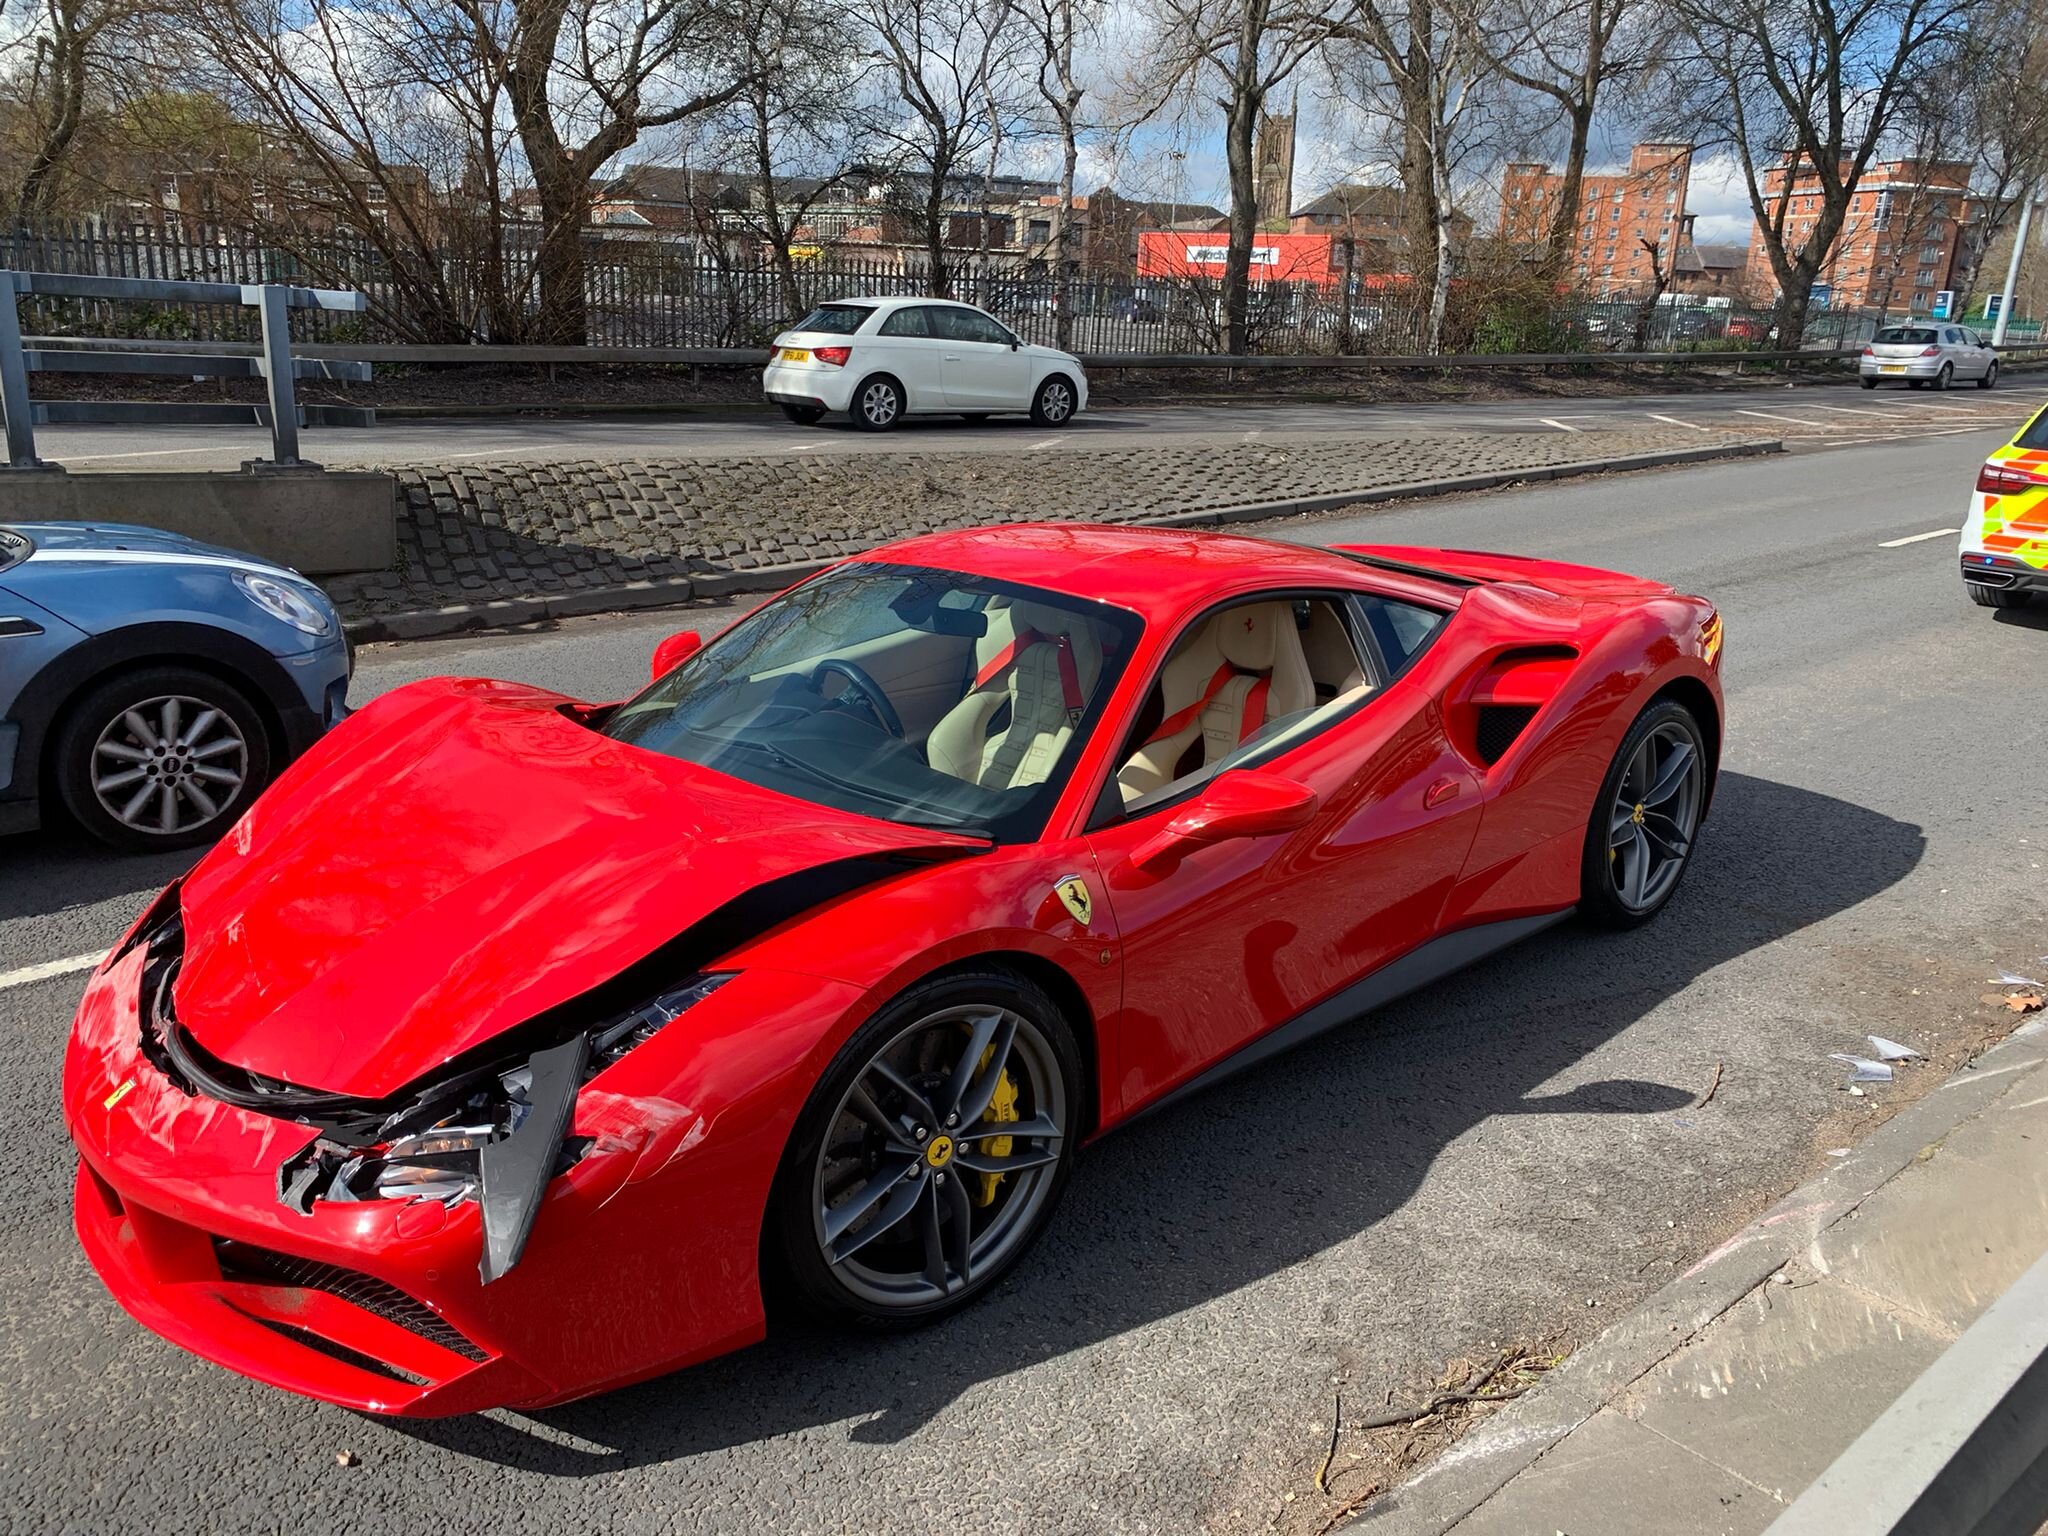 Se compra un Ferrari de 300.000 euros y le dura tres kilómetros